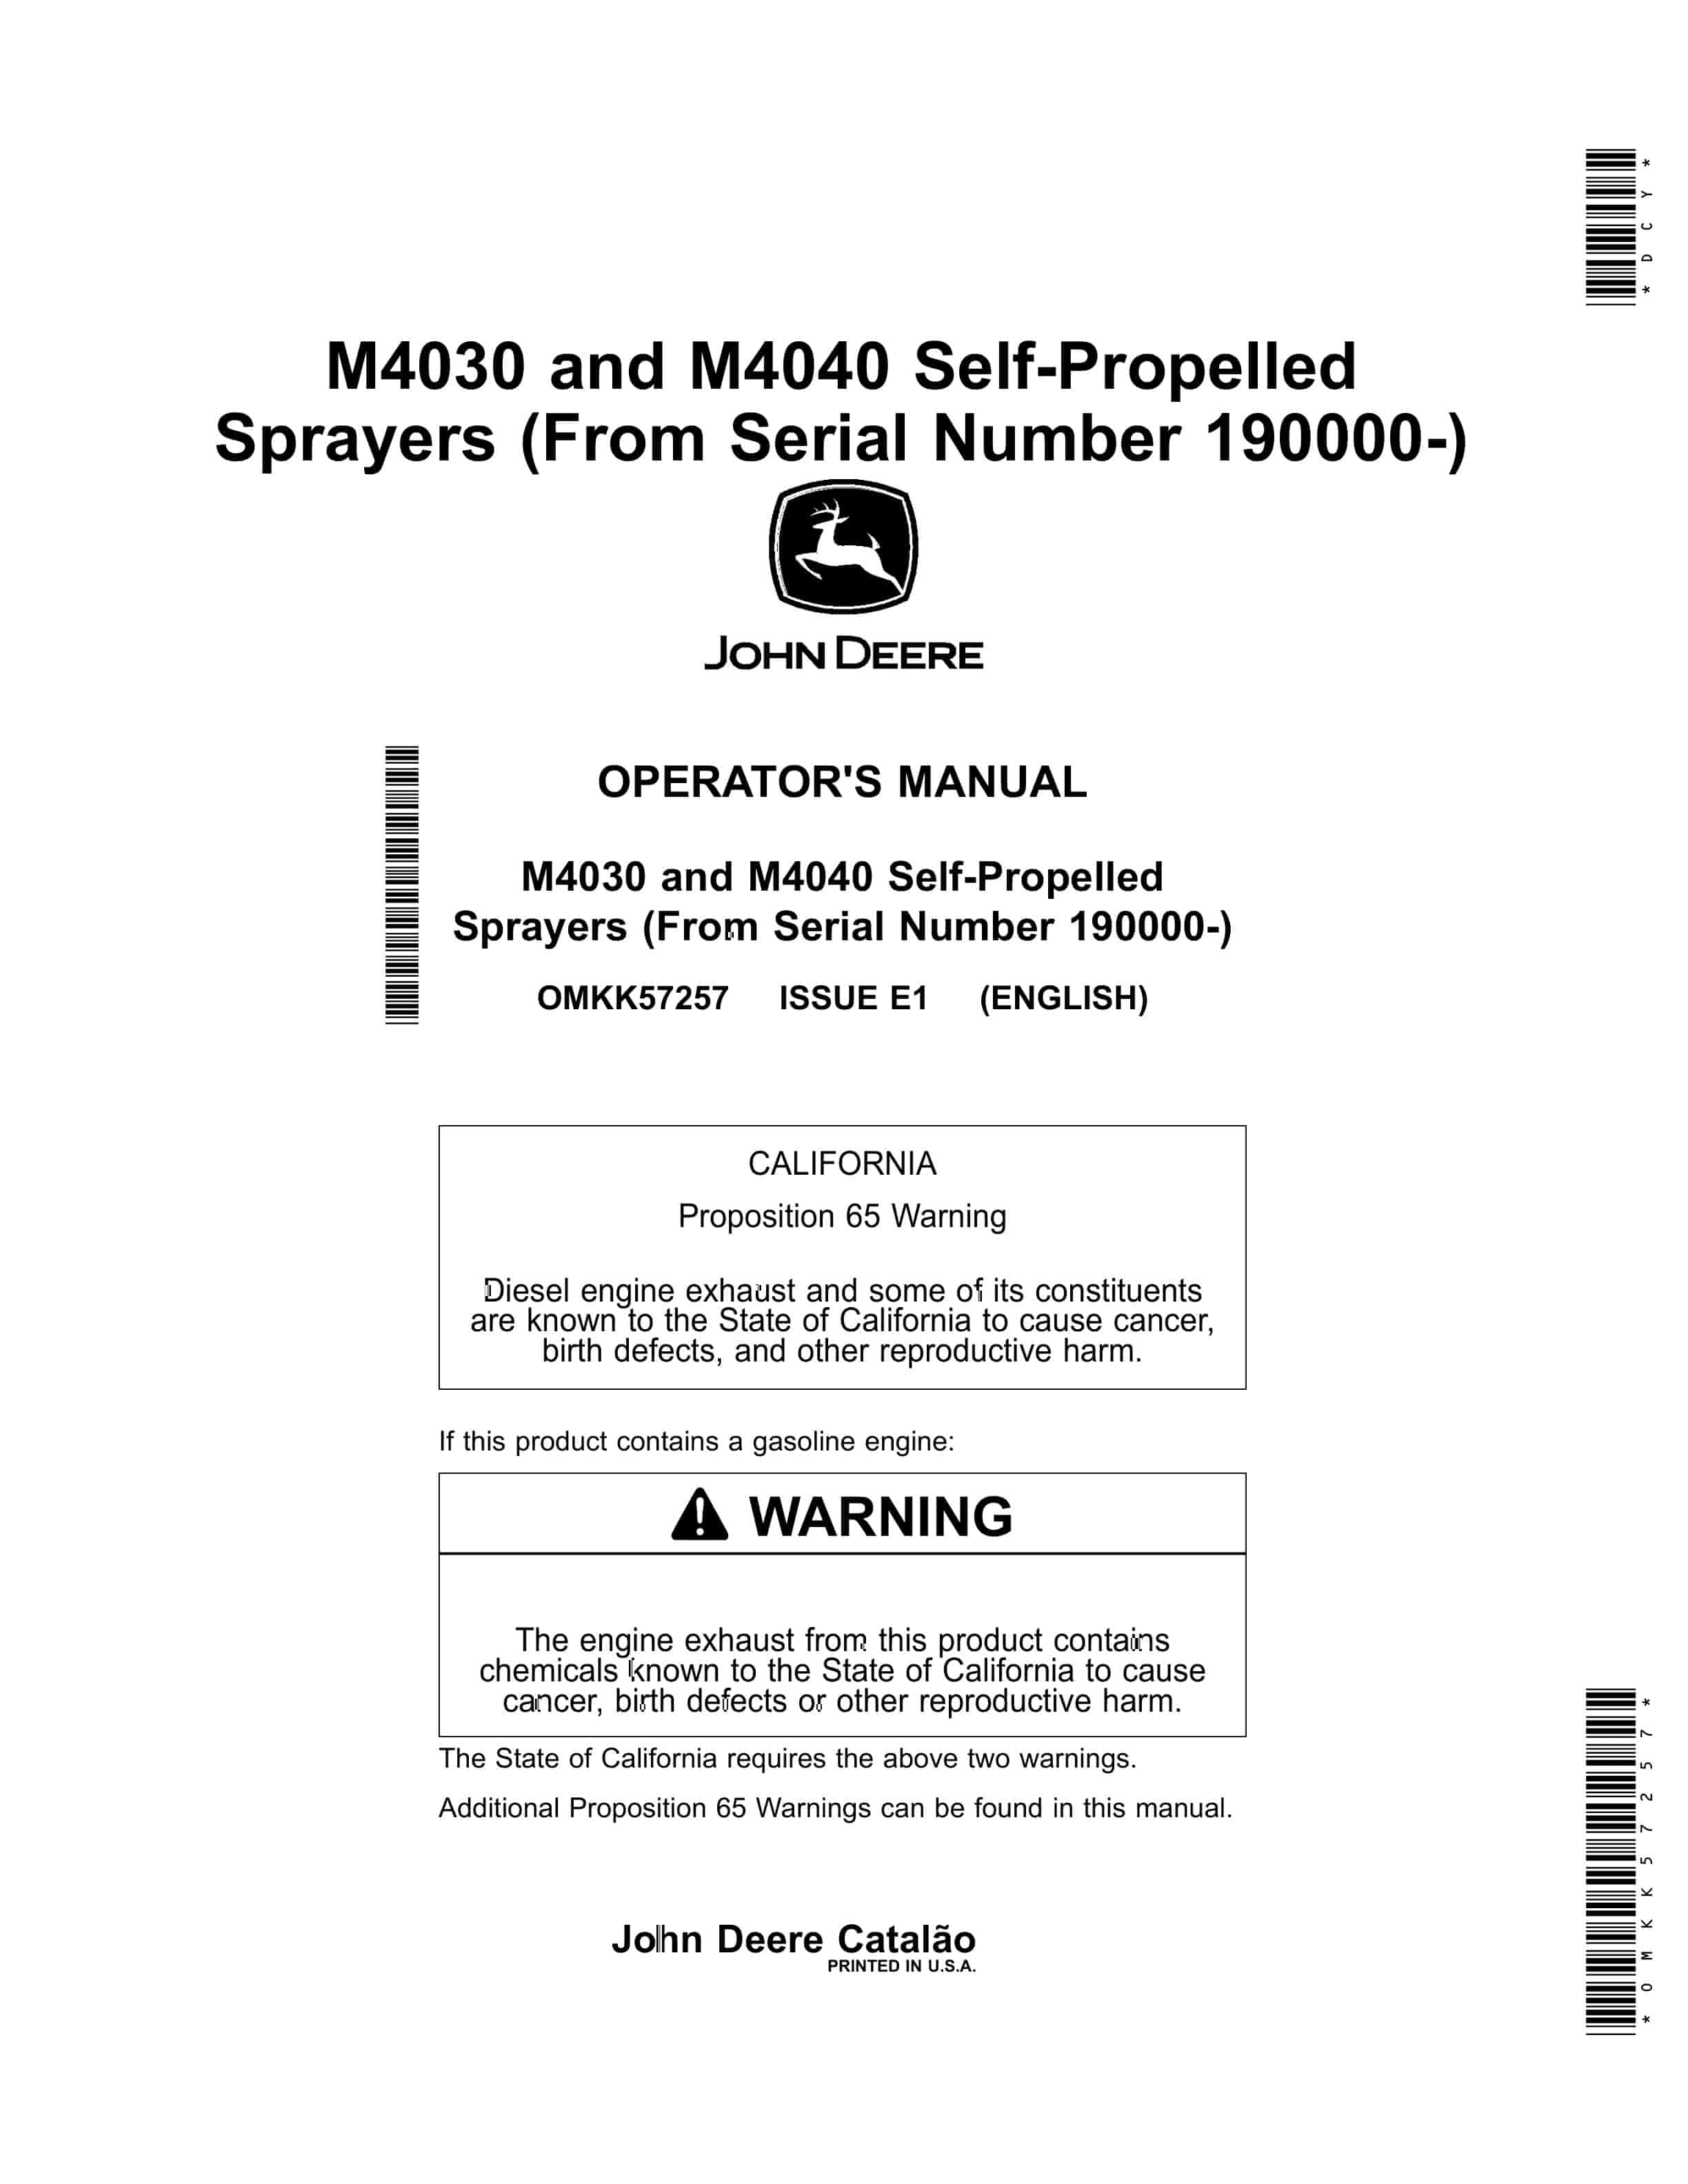 John Deere M4030 and M4040 Self Propelled Sprayer Operator Manual OMKK57257 1